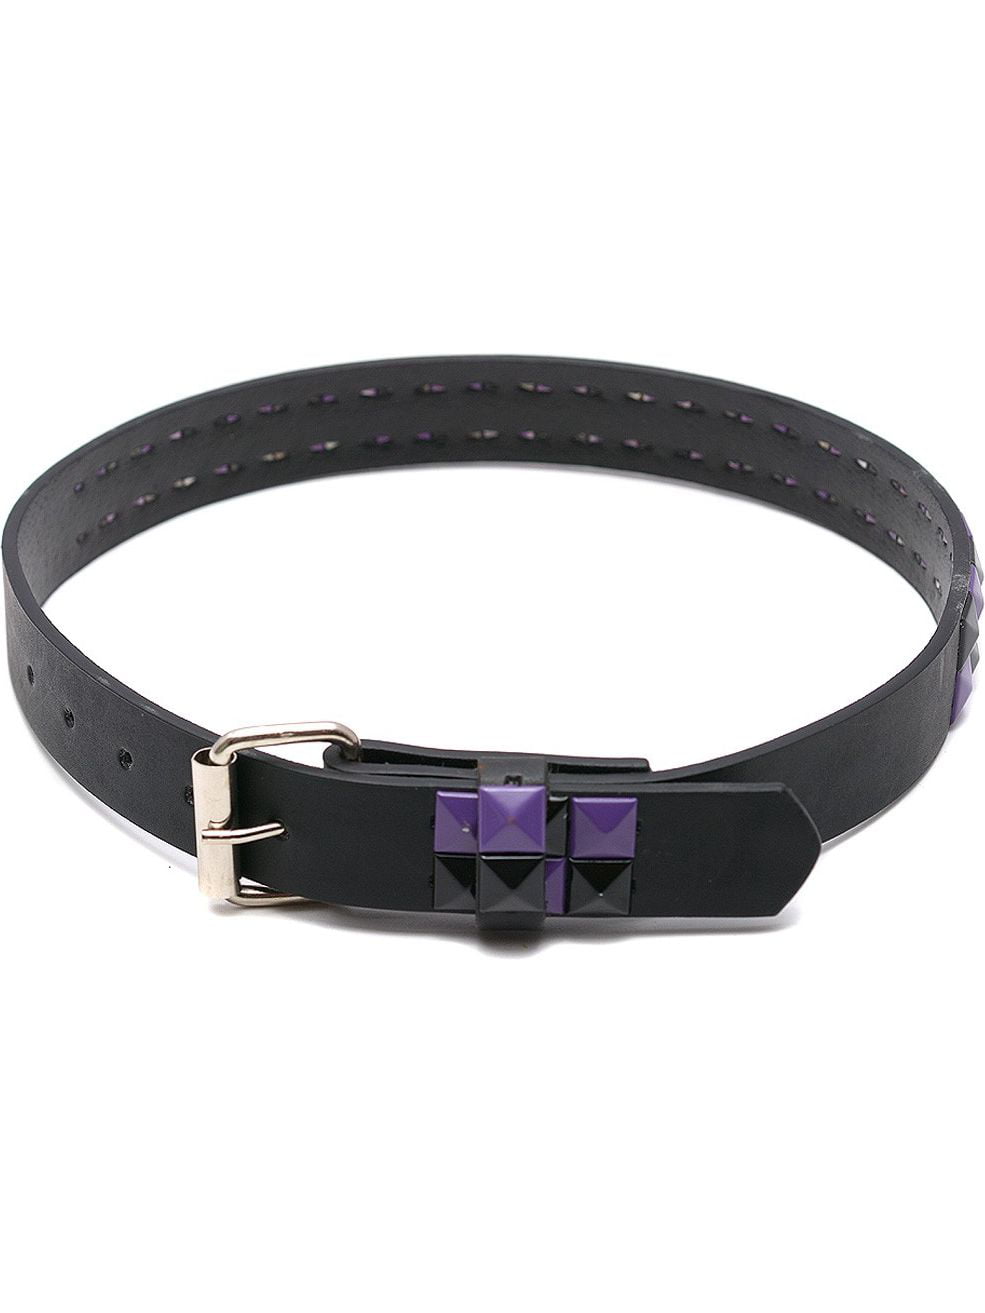 Girls Purple Black Studded Belt Large 